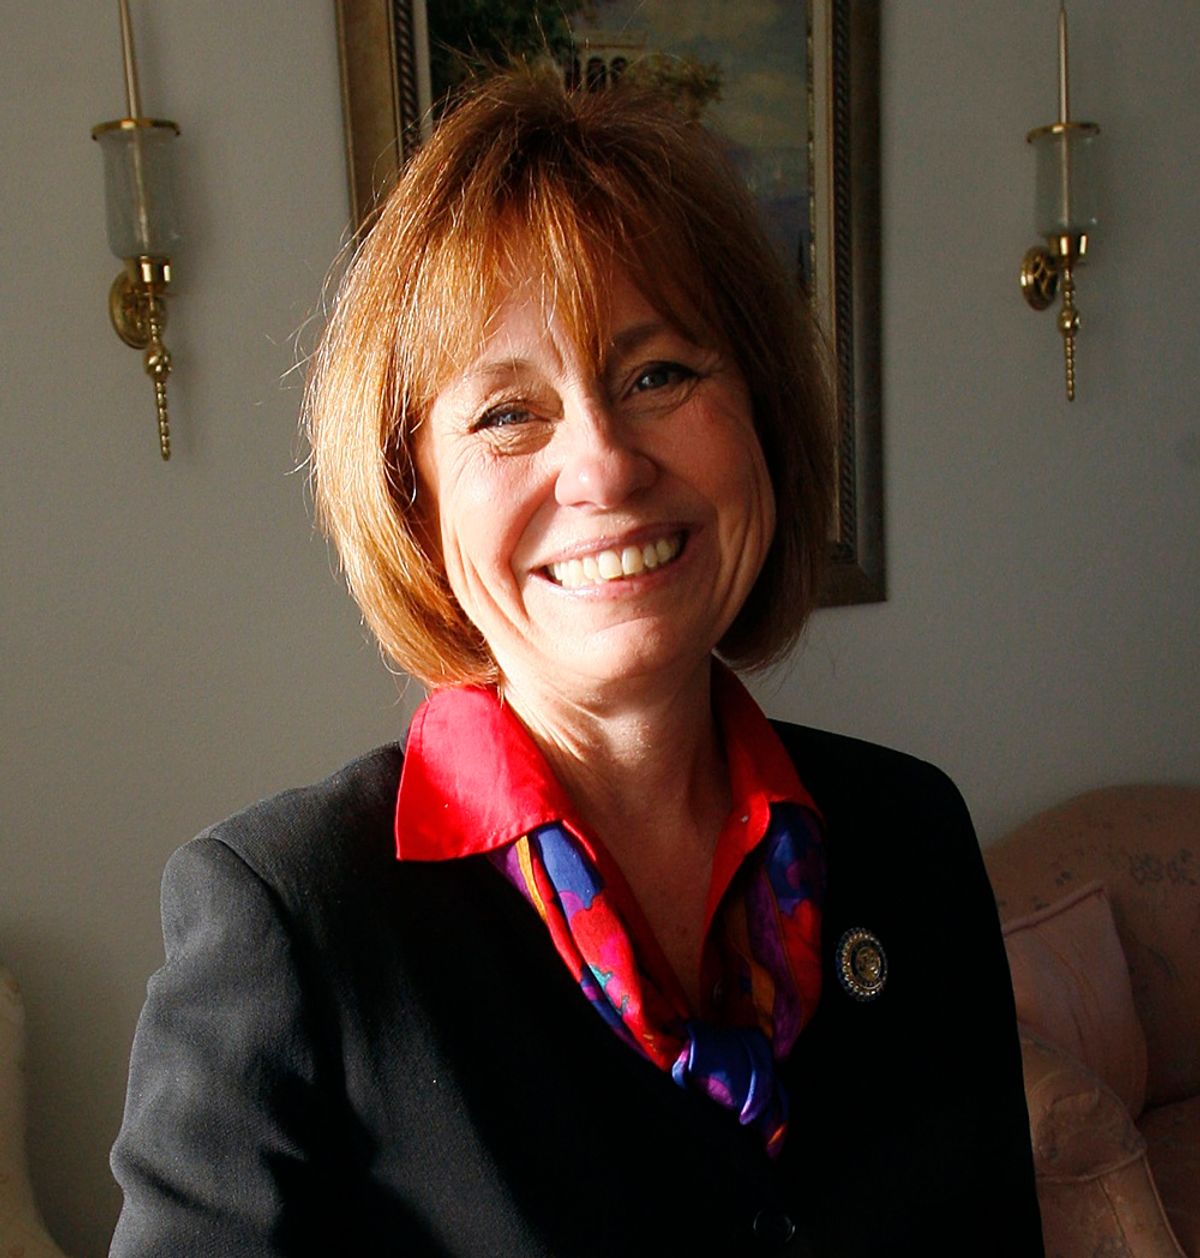 Sharron Angle, the Tea Party's Nevada Senate candidate